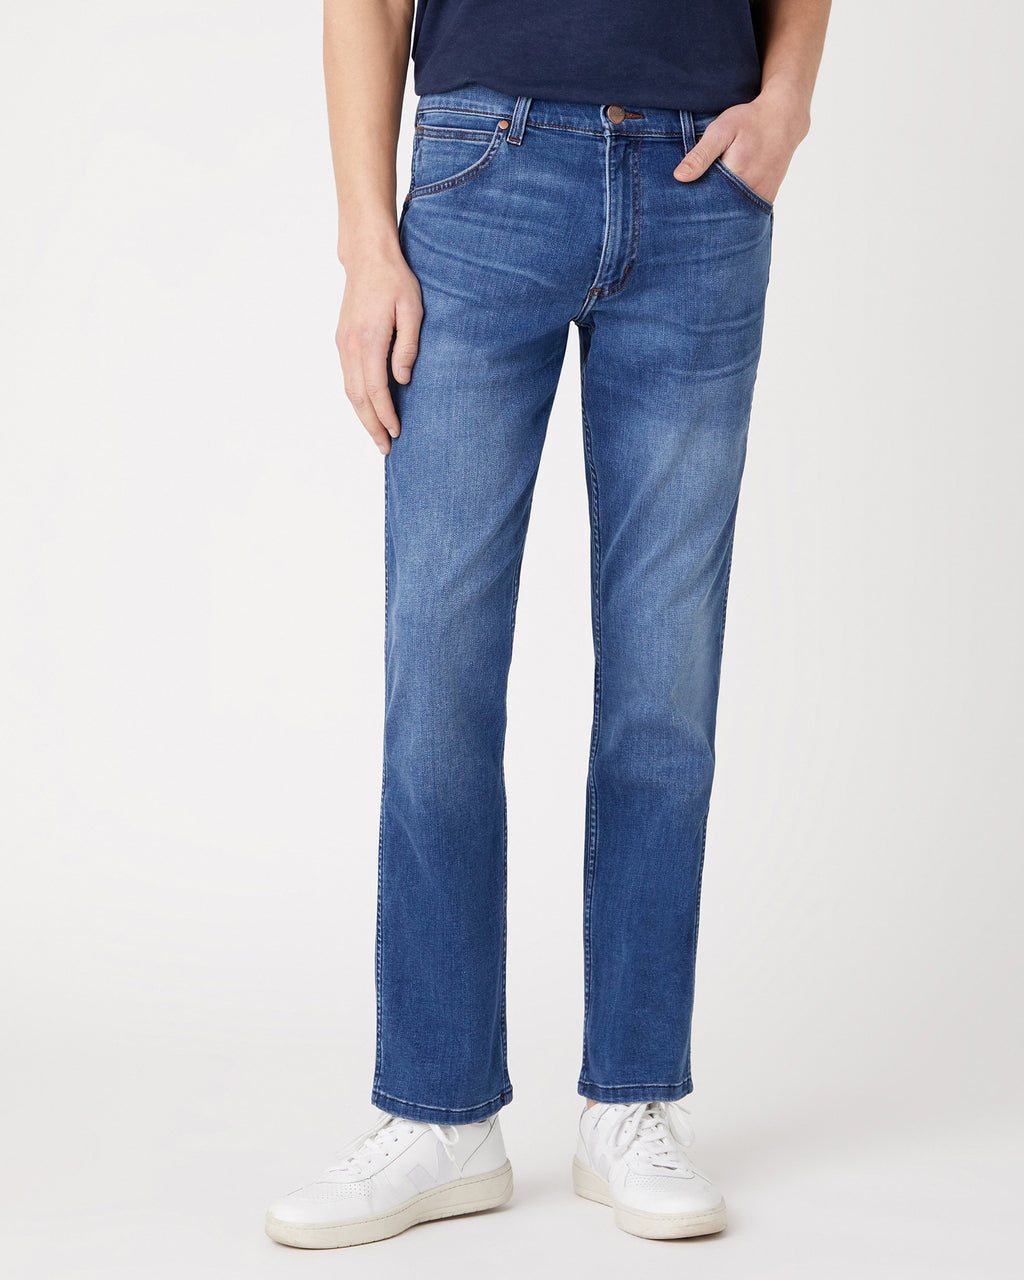 Wrangler Greensboro Regular Fit Mens Jeans - Bright Stroke